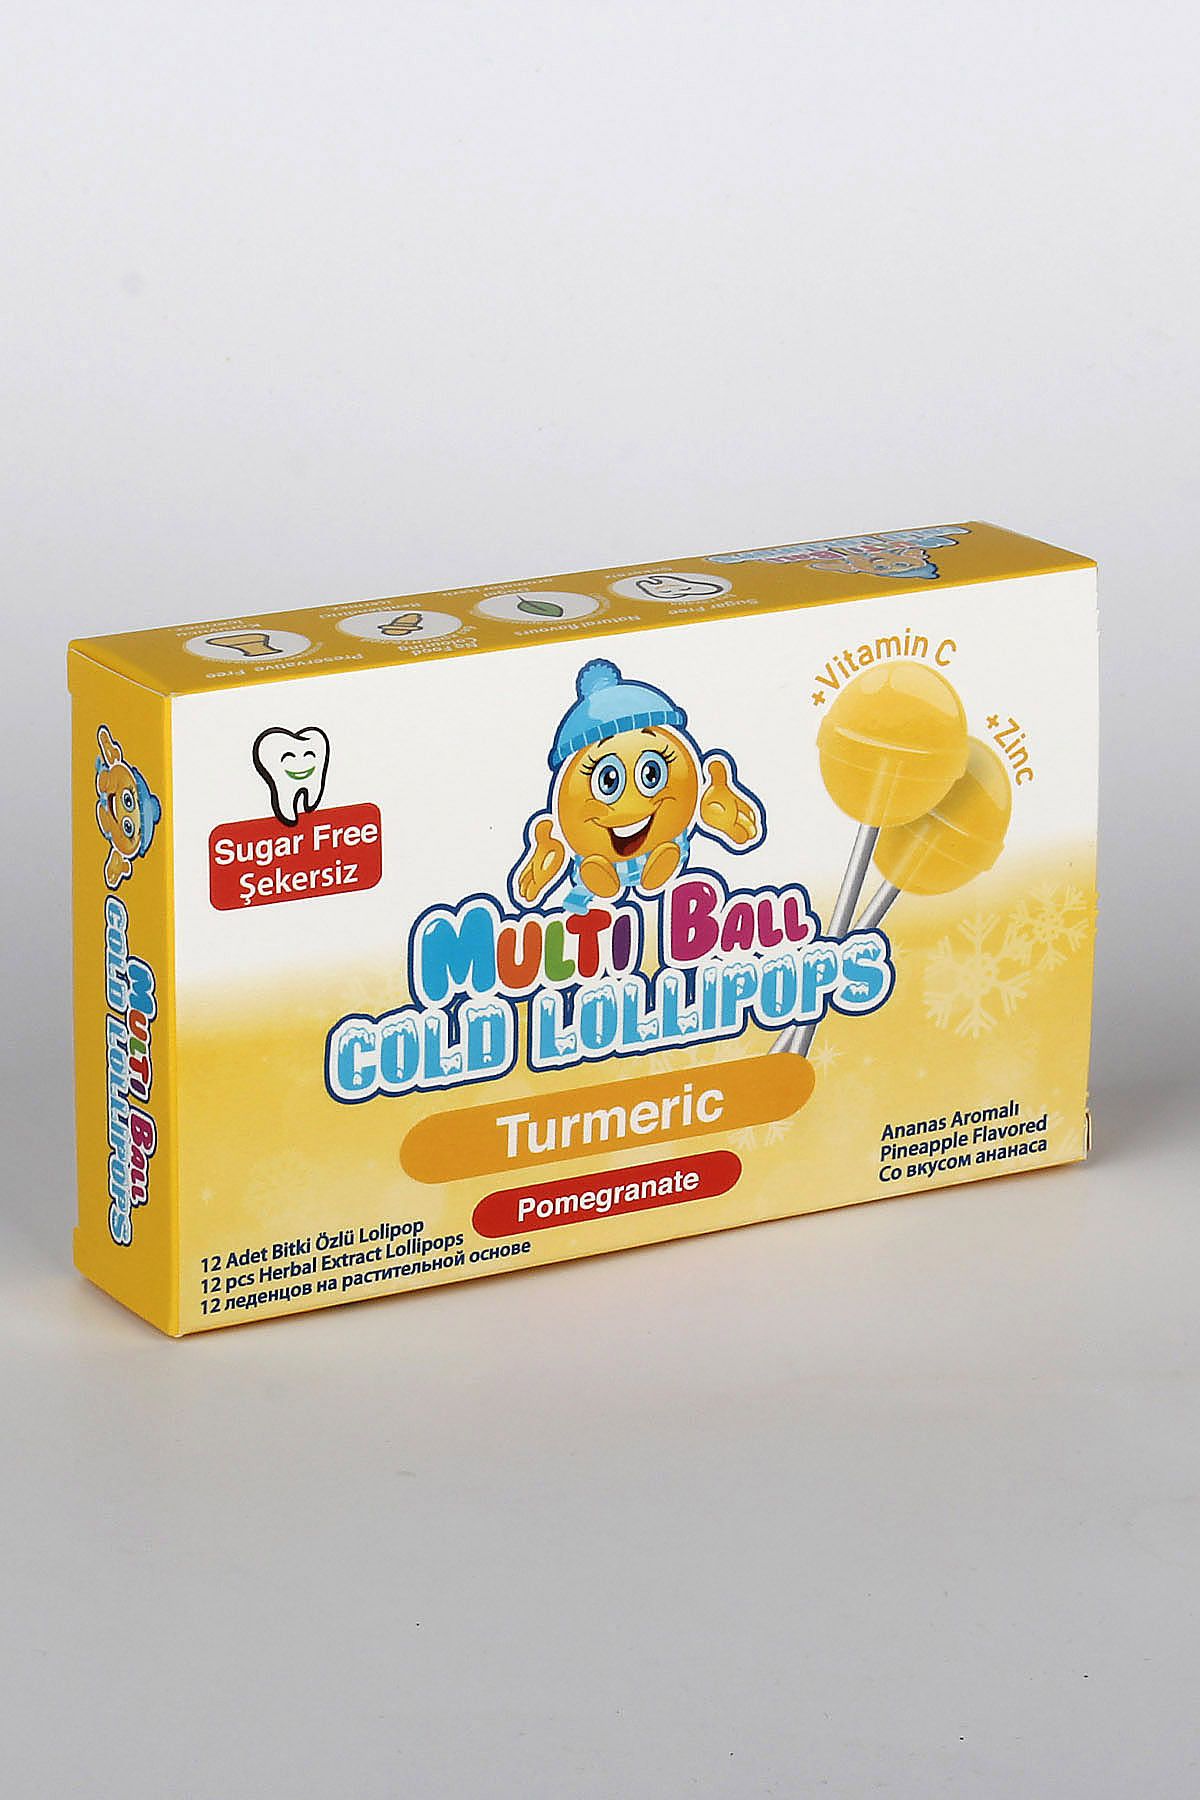 Multiball Cold ( Zerdeçal / Nar Kabuğu) Şekersiz / Sugar Free Lolipop 12 Ad